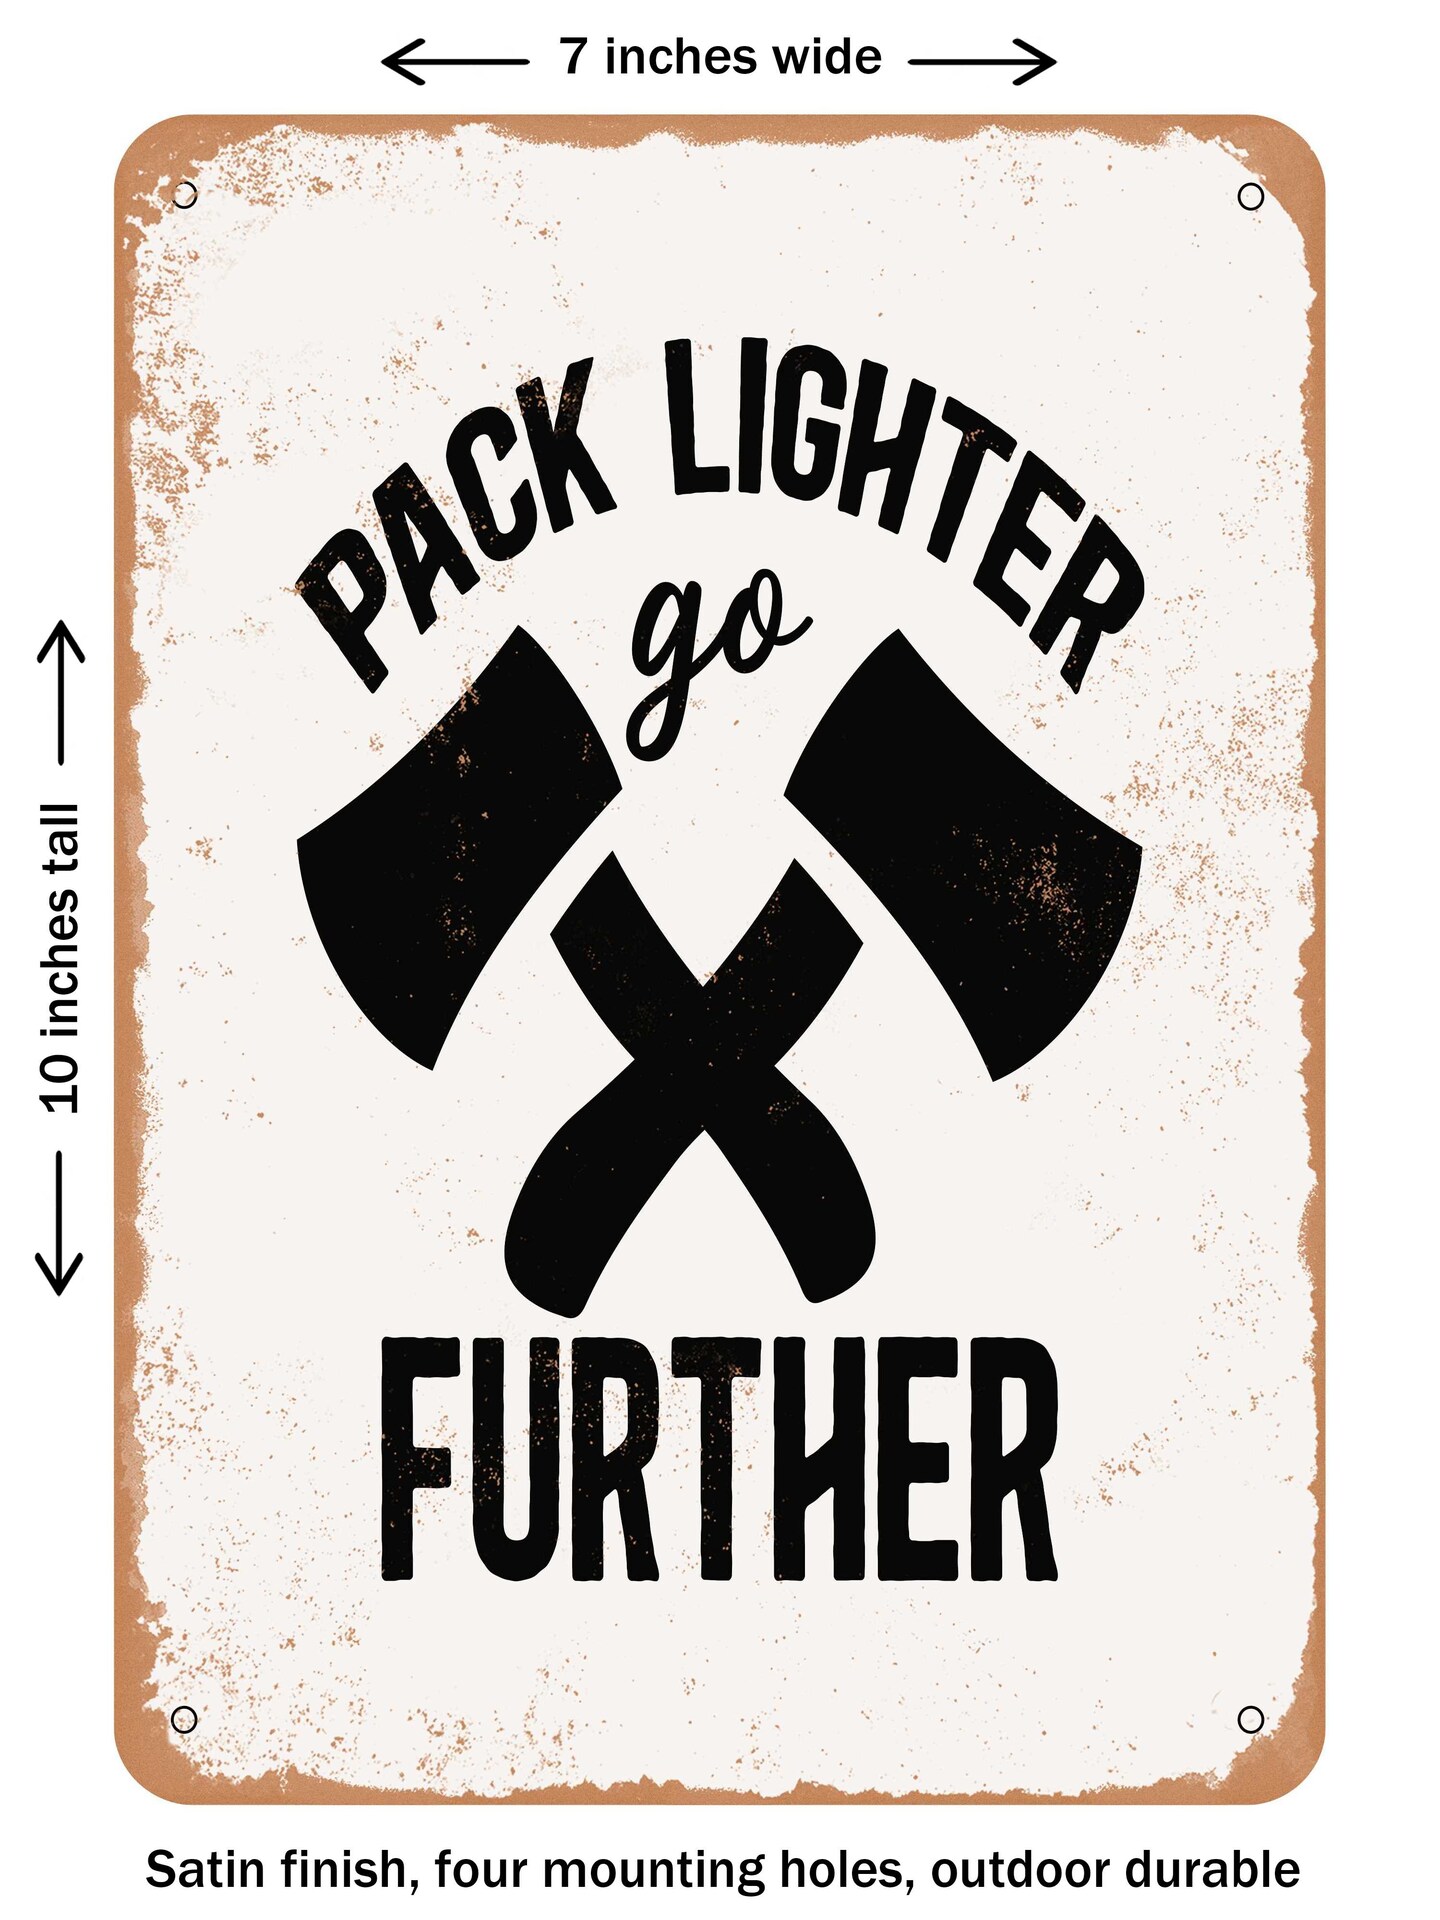 DECORATIVE METAL SIGN - Pack Lighter Go Further - Vintage Rusty Look